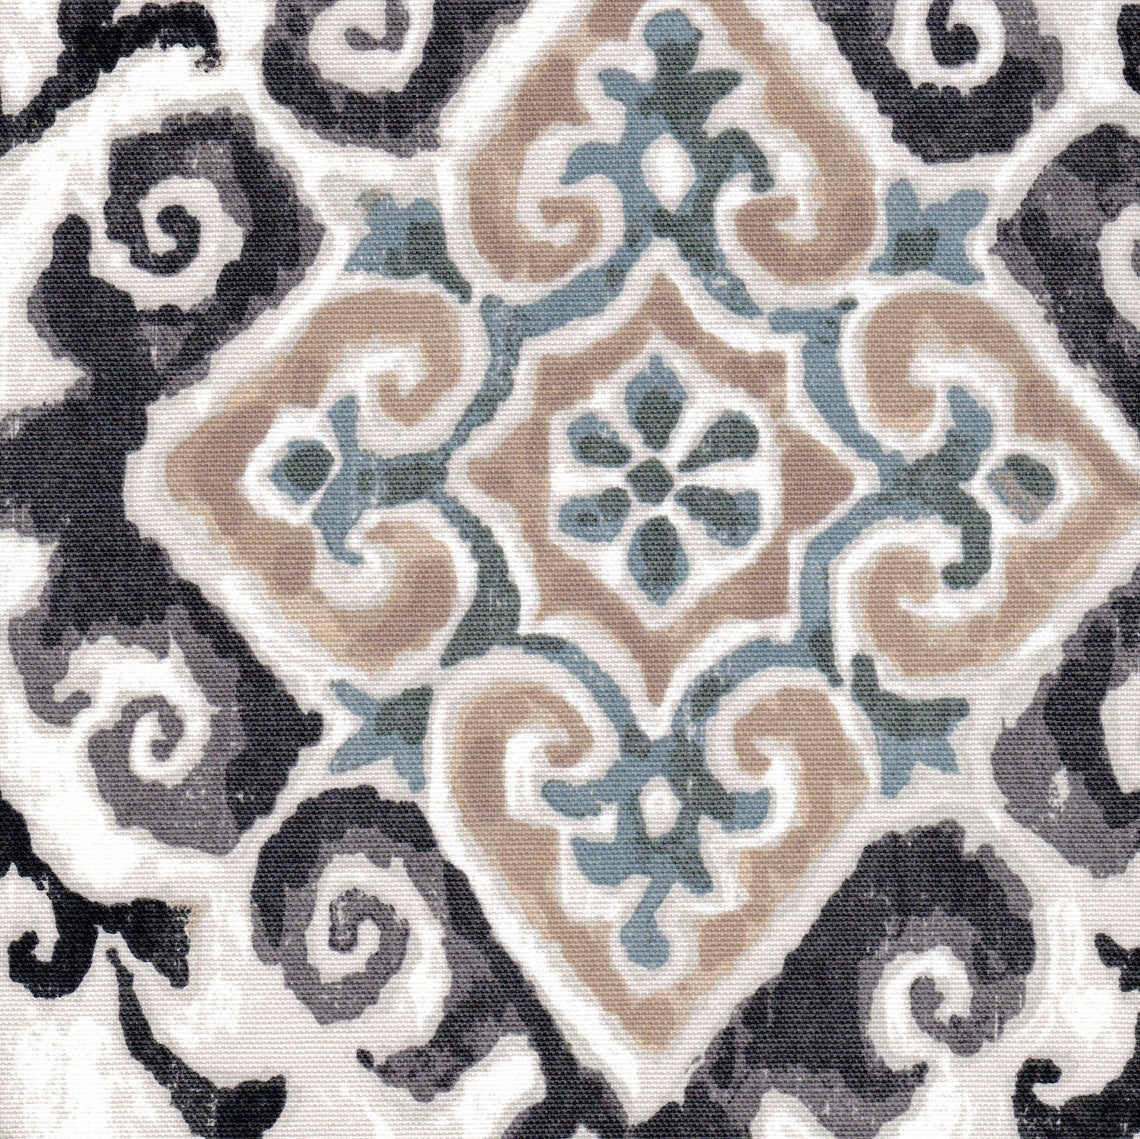 shower curtain in feabhra slate gray diamond medallion - blue, tan, large scale